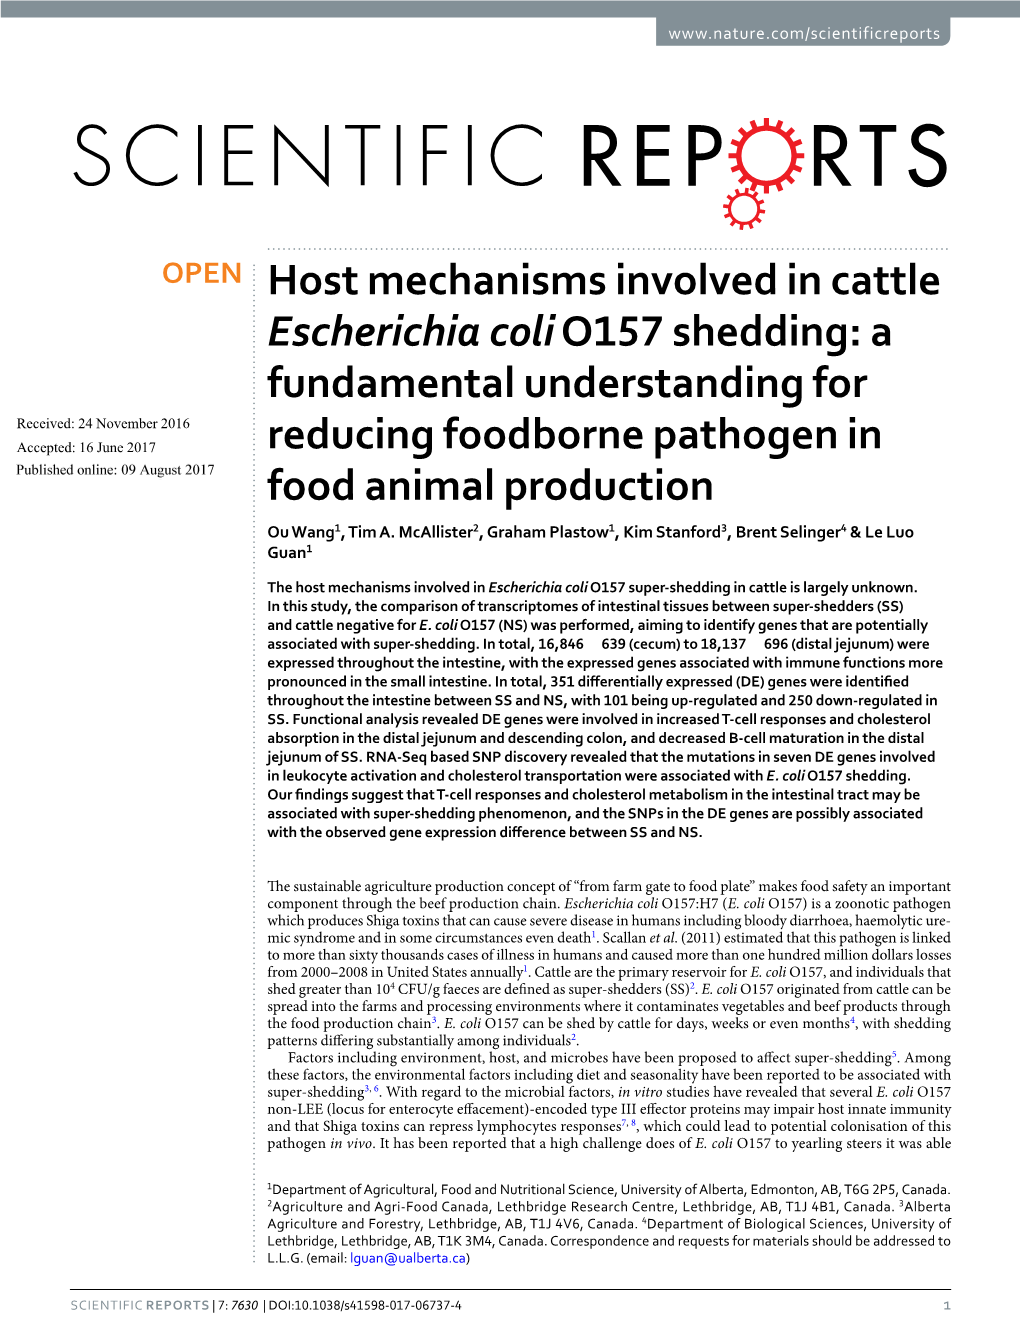 Host Mechanisms Involved in Cattle Escherichia Coli O157 Shedding: a Fundamental Understanding for Reducing Foodborne Pathogen I